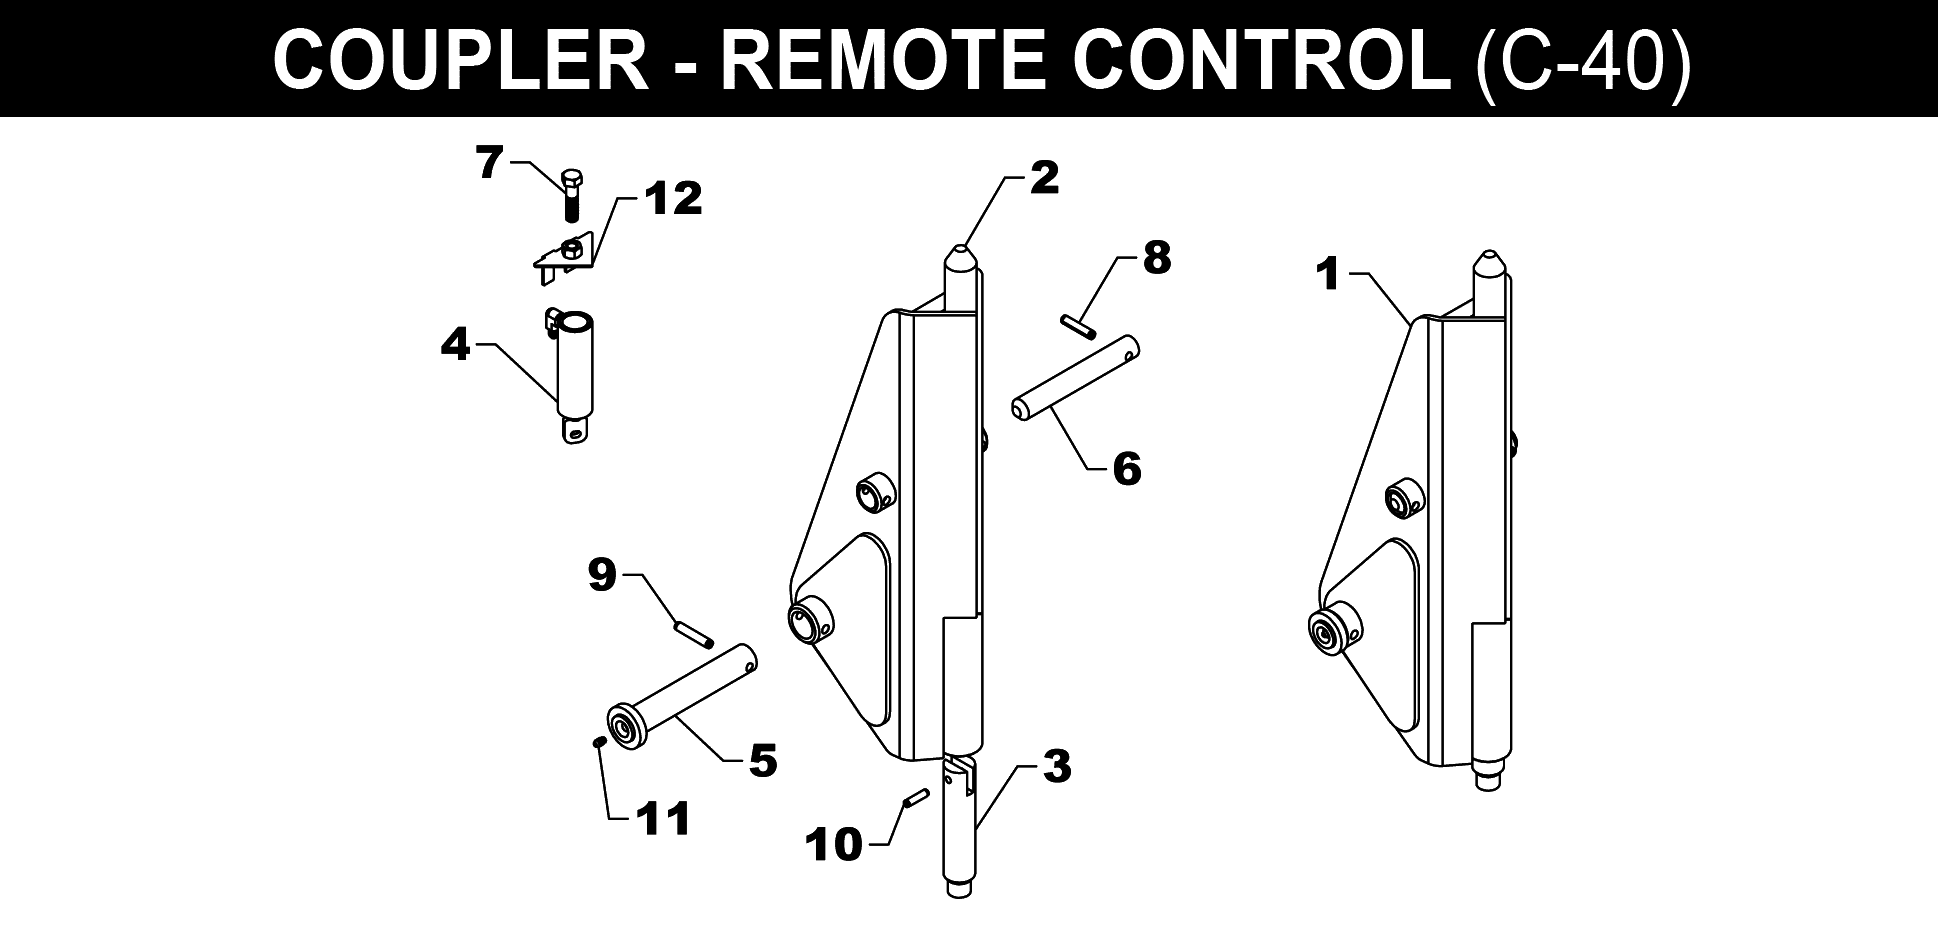 REMOTE CONTROL COUPLER - C-40